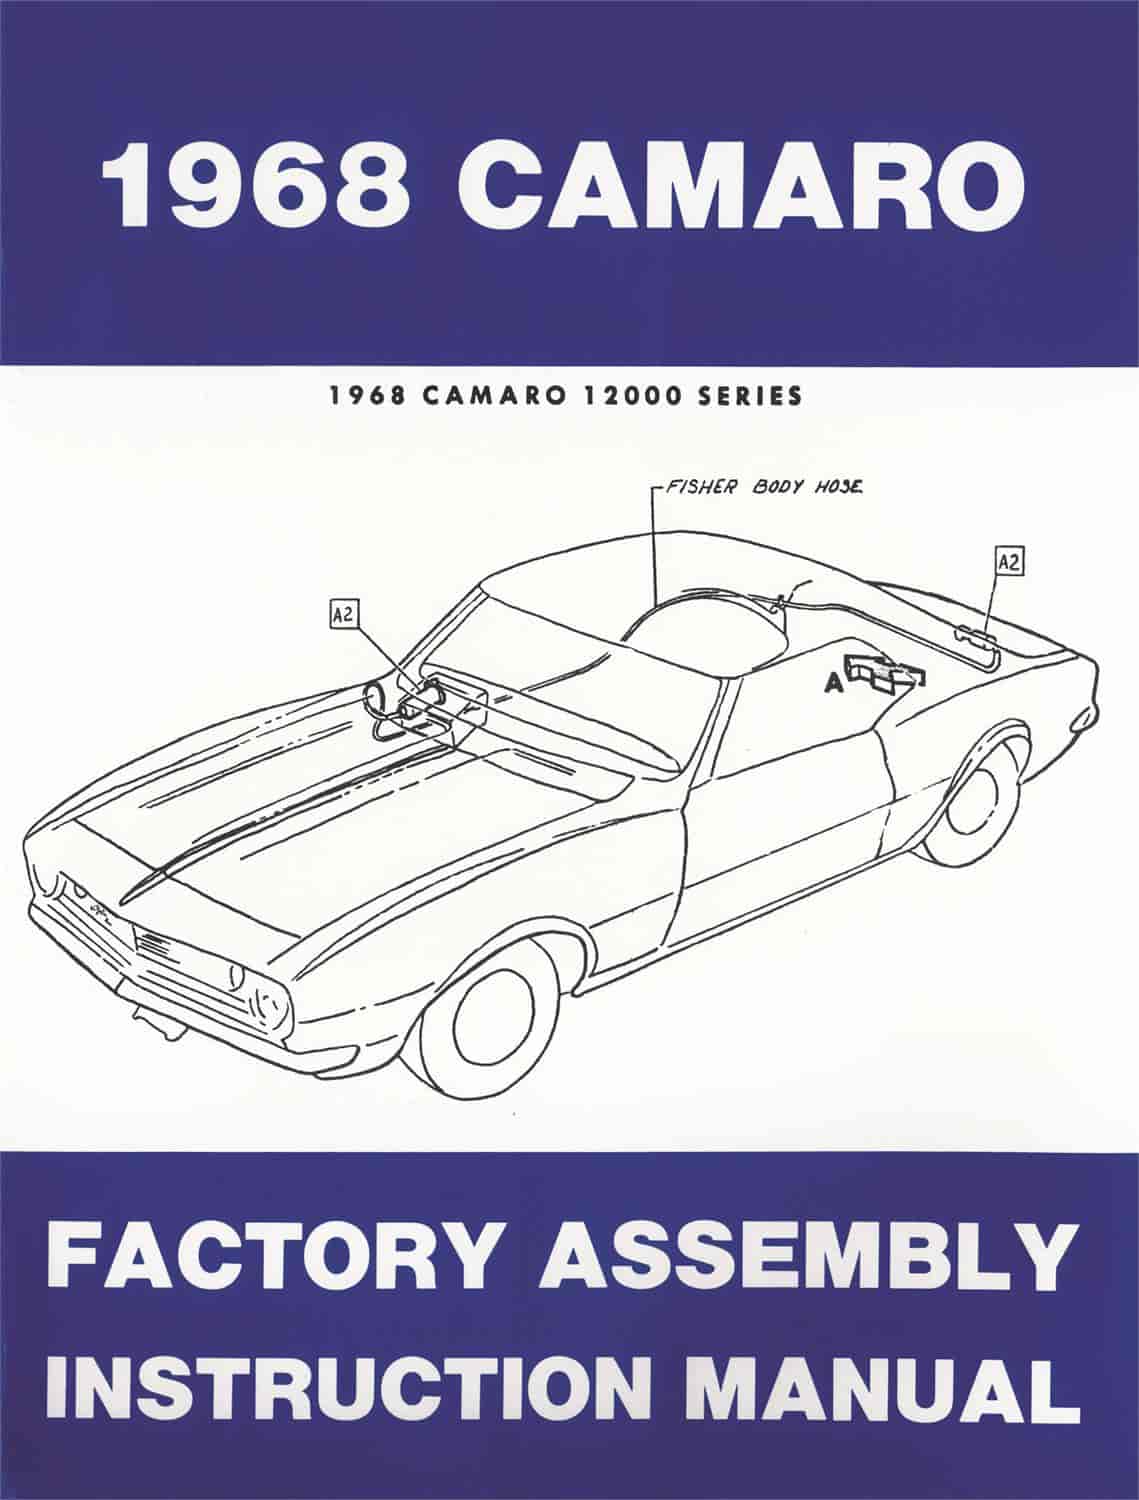 Factory Assembly Manual 1968 Chevy Camaro